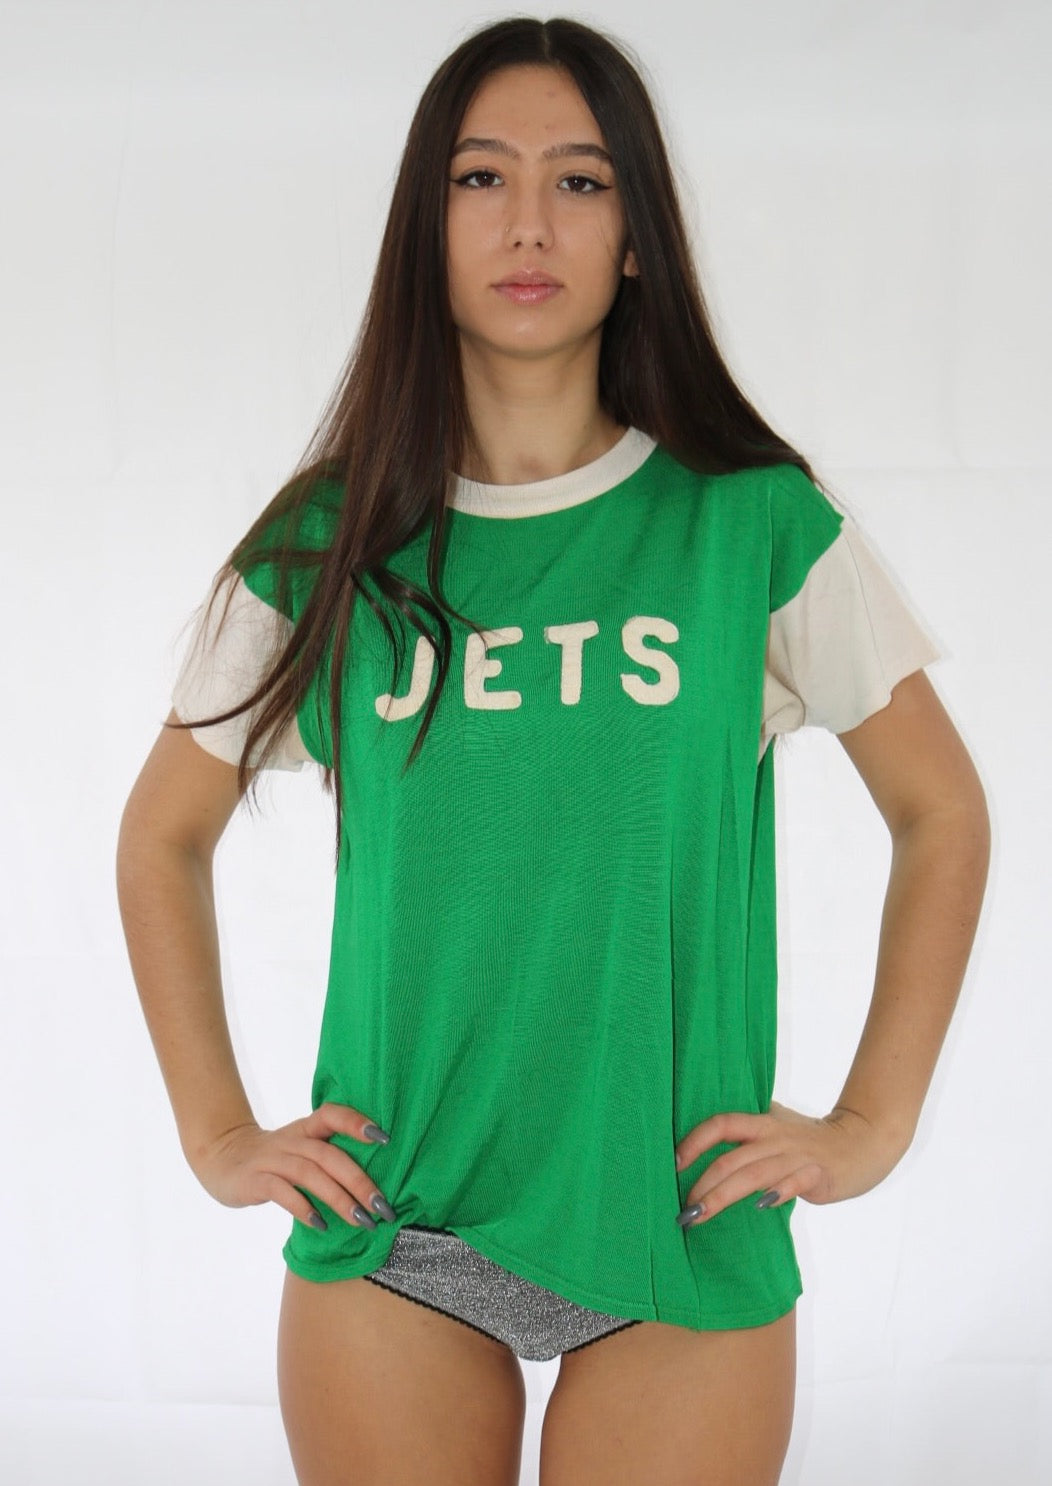 jets 1960's jersey vintage t -shirt